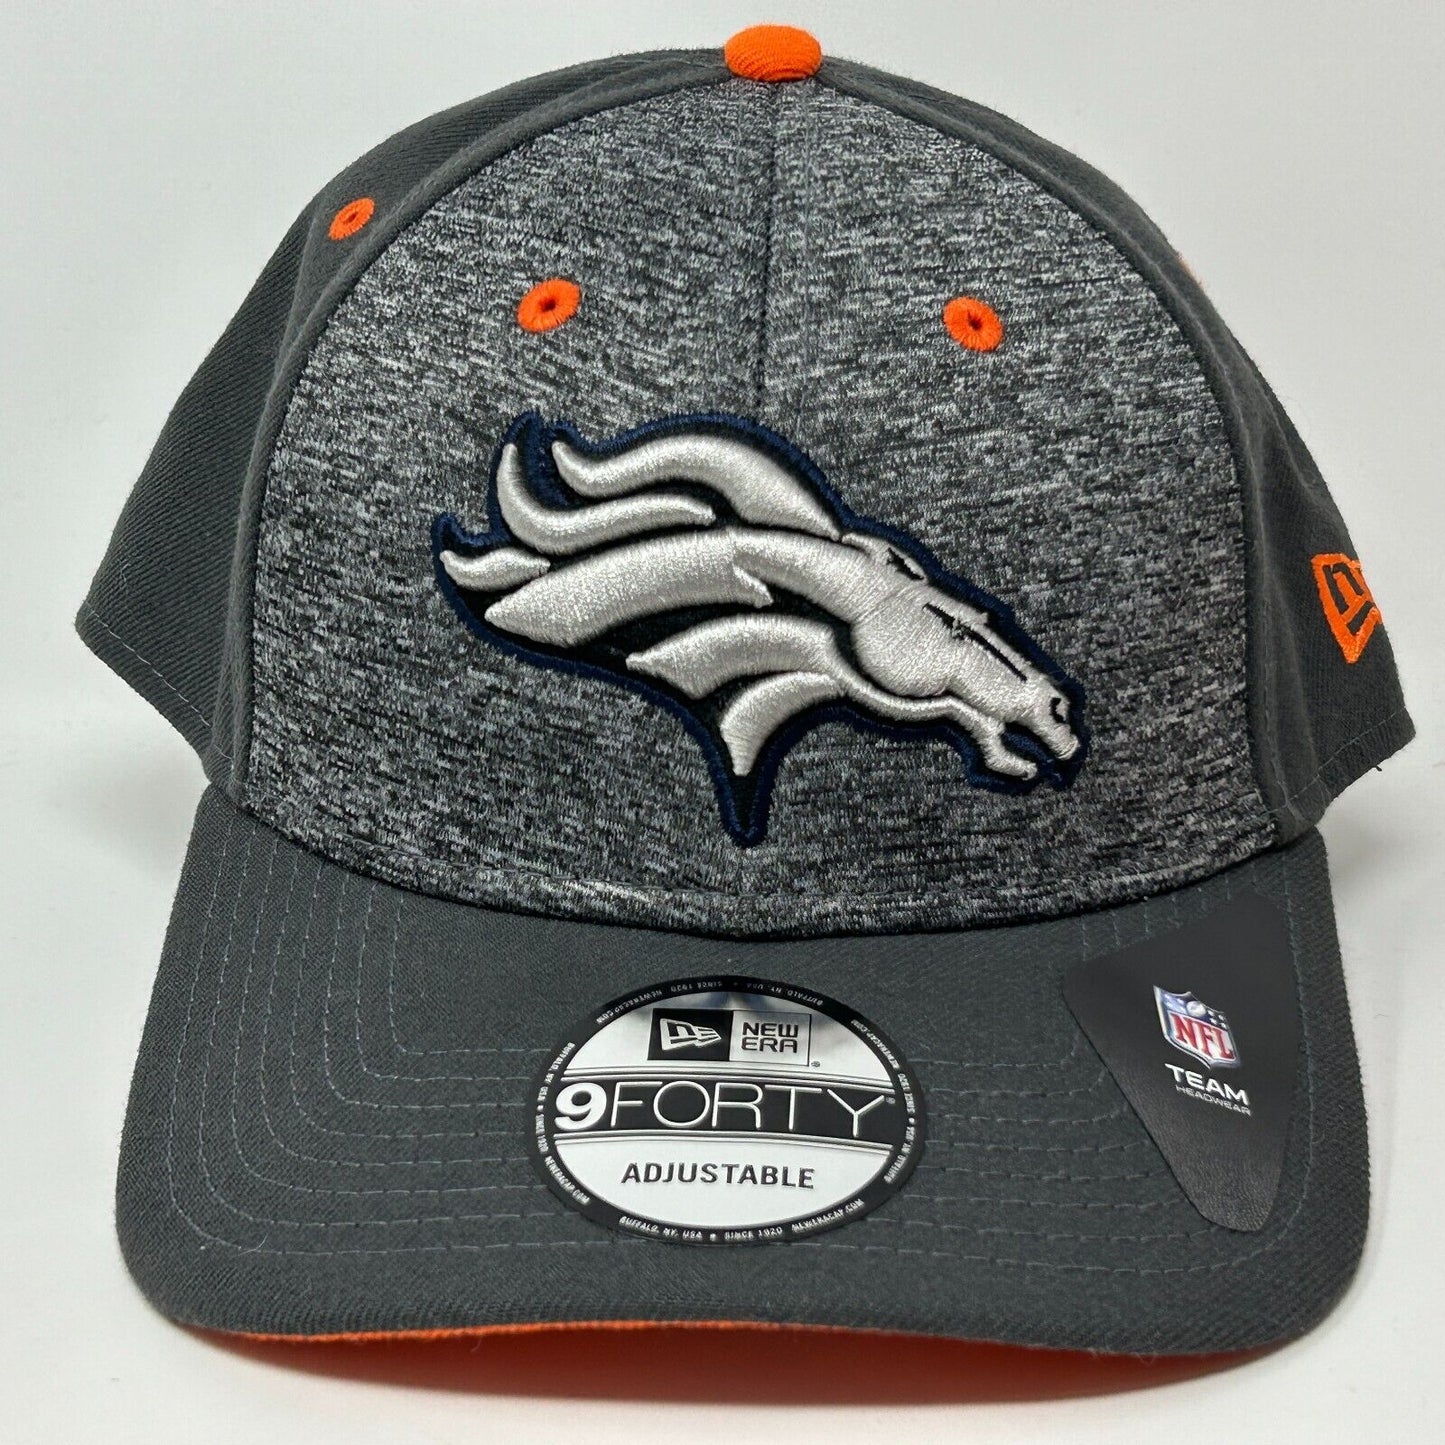 Denver Broncos Hat NFL Team Football Gray Orange New Era Strapback Baseball Cap